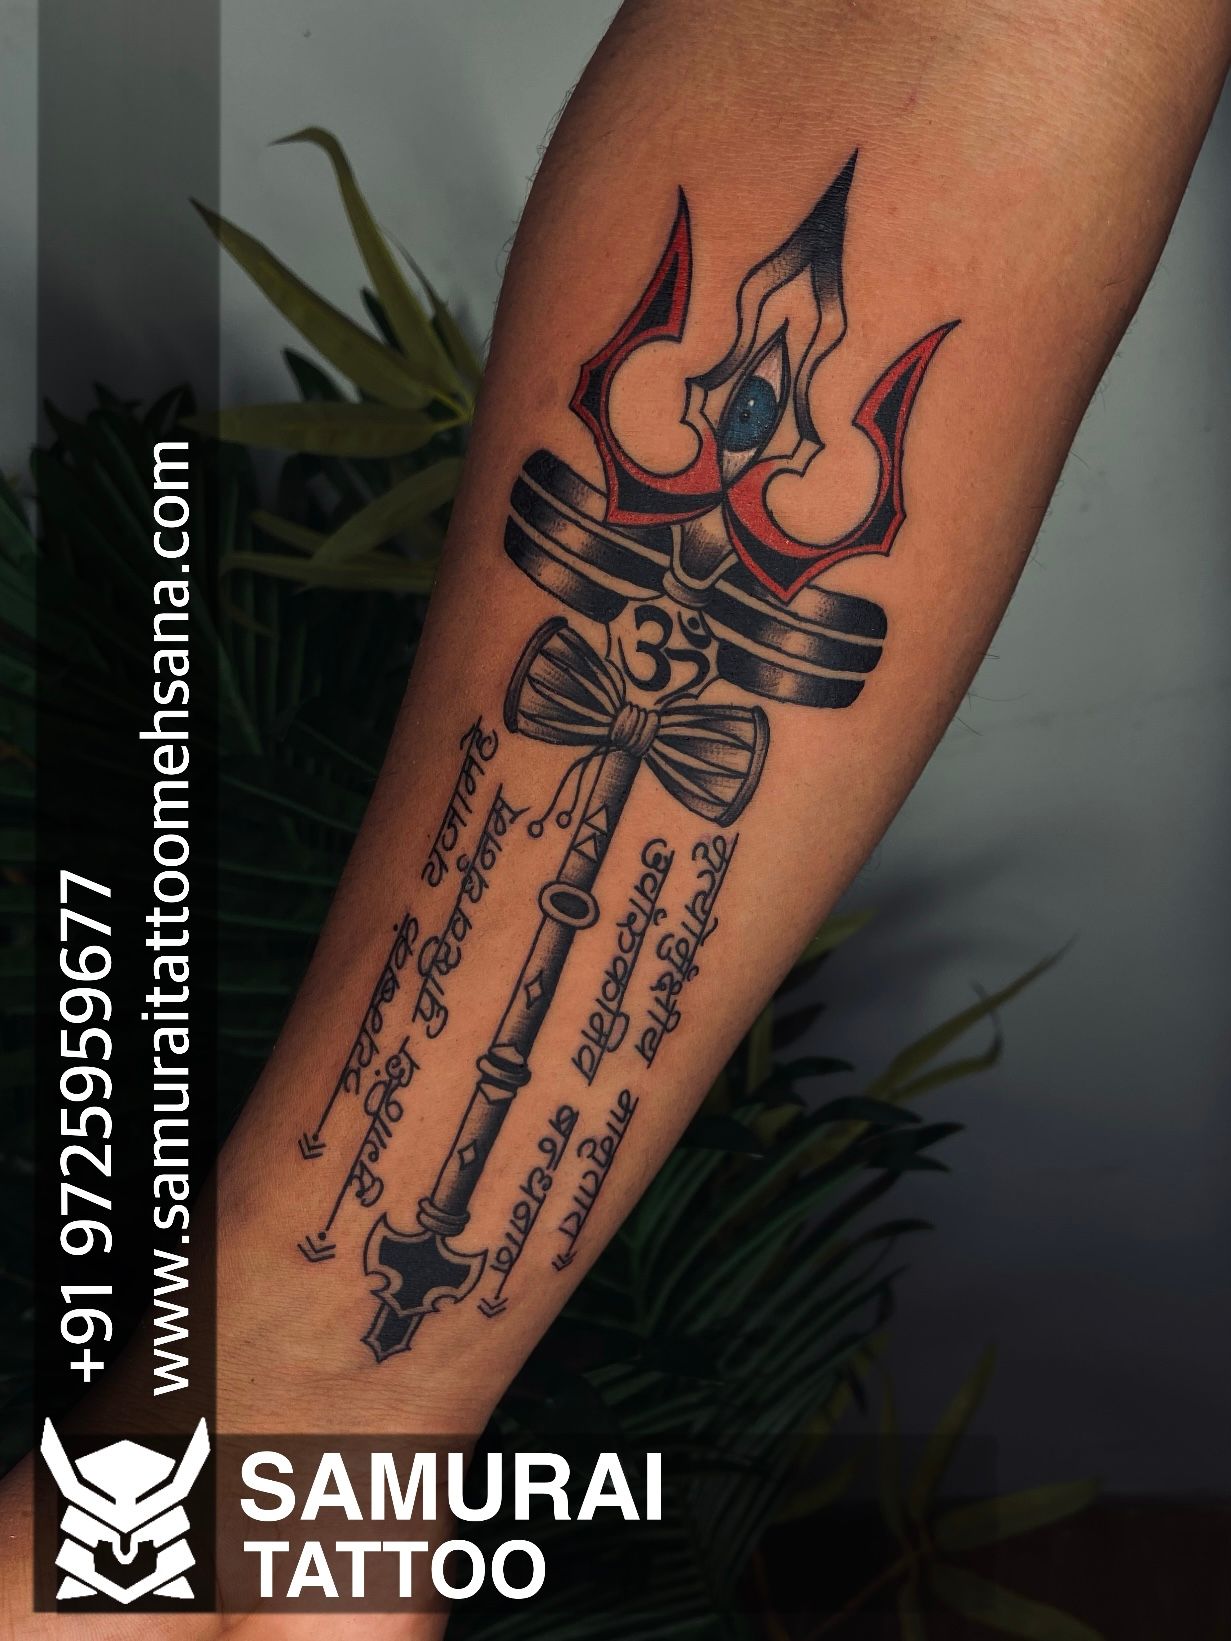 Details more than 130 trishul tattoo designs